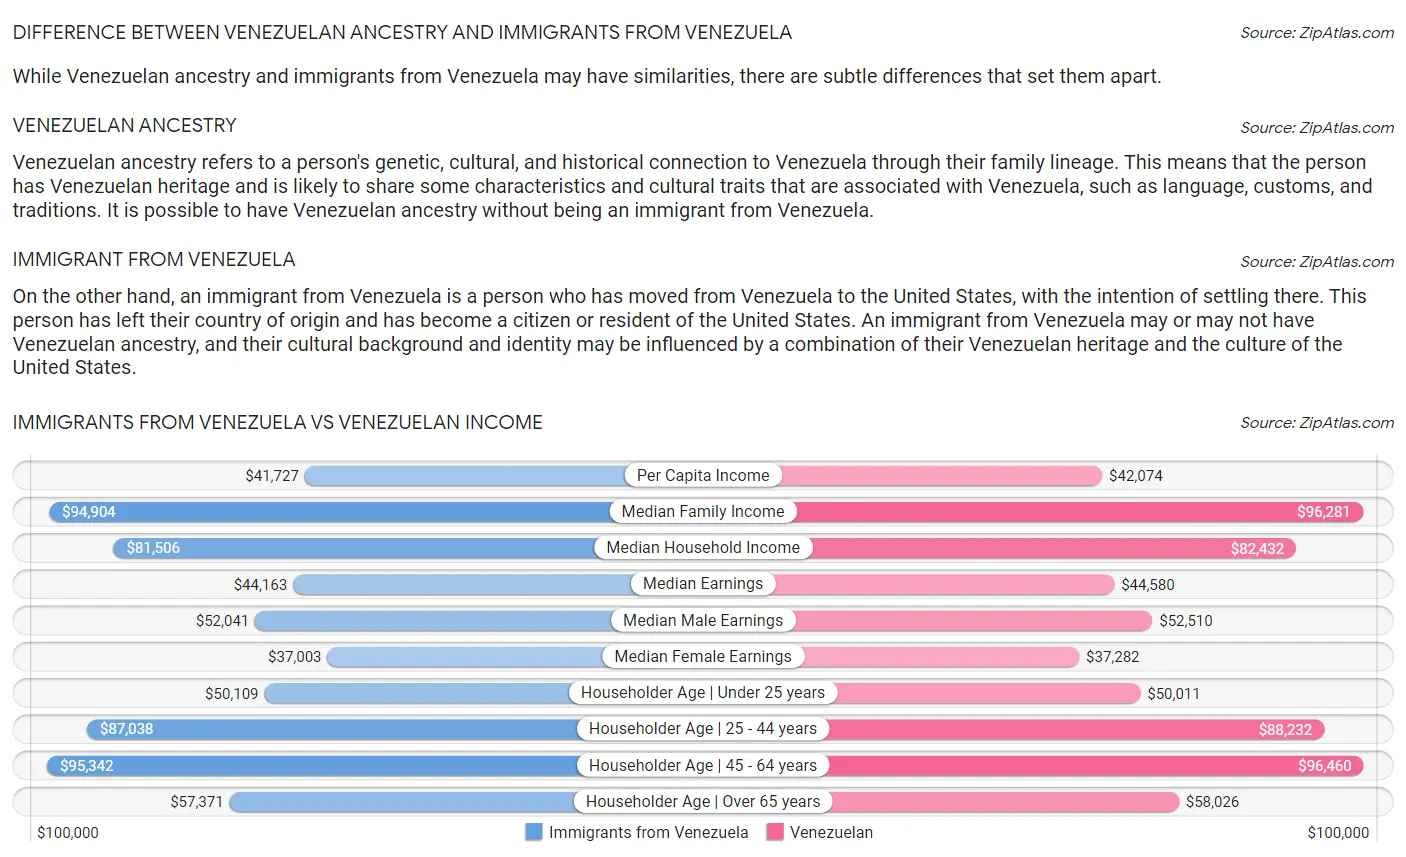 Immigrants from Venezuela vs Venezuelan Income